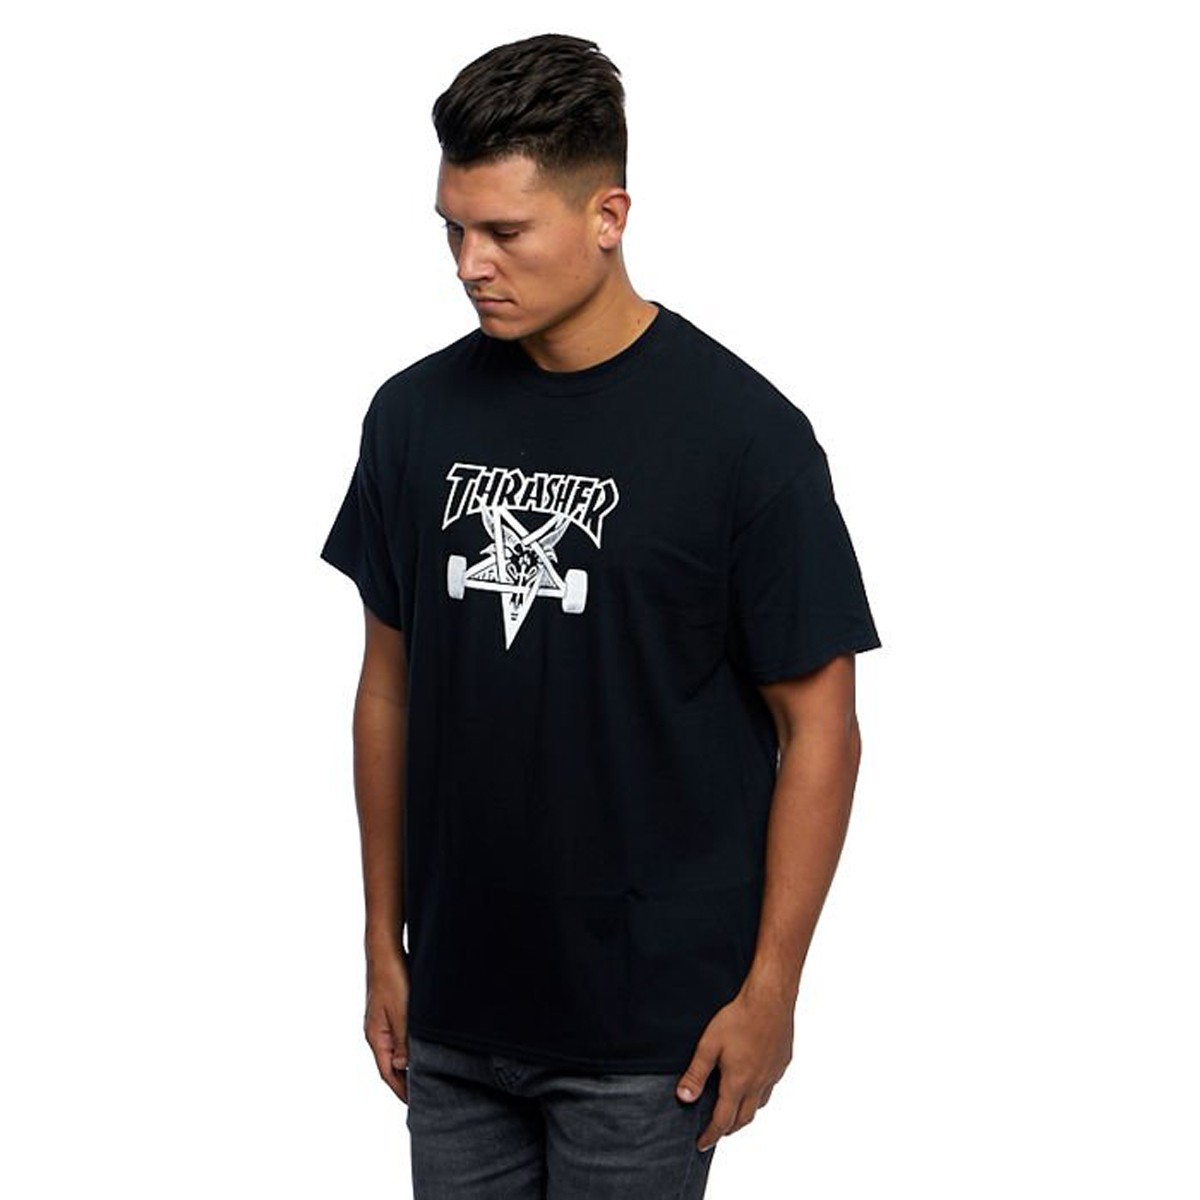 Thrasher Skategoat Black T-Shirt 110117